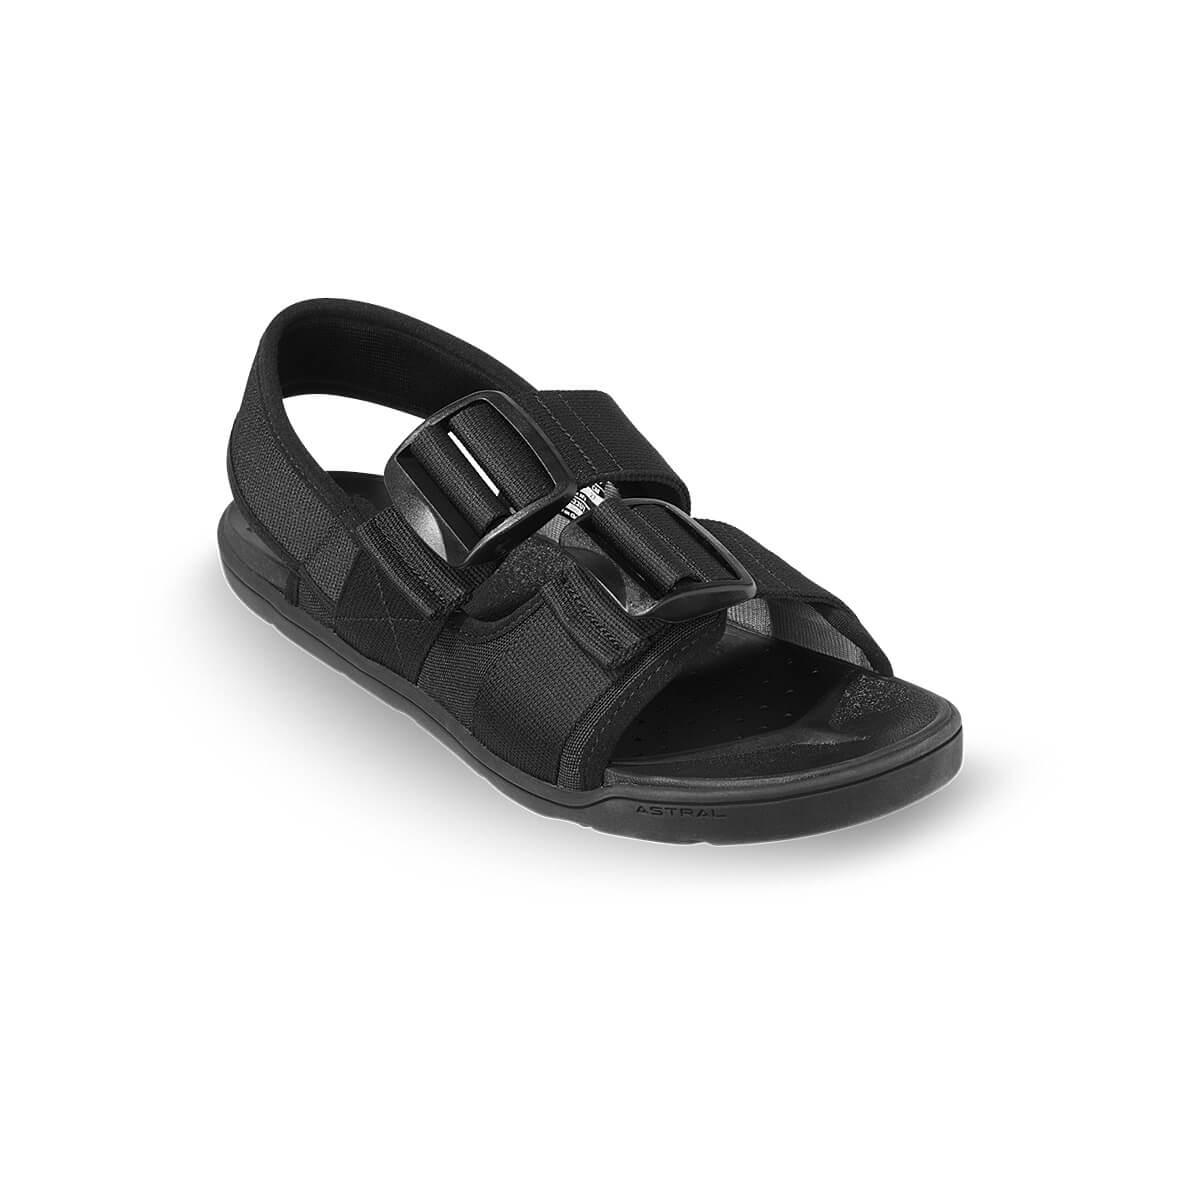  Men's Webber Sandals